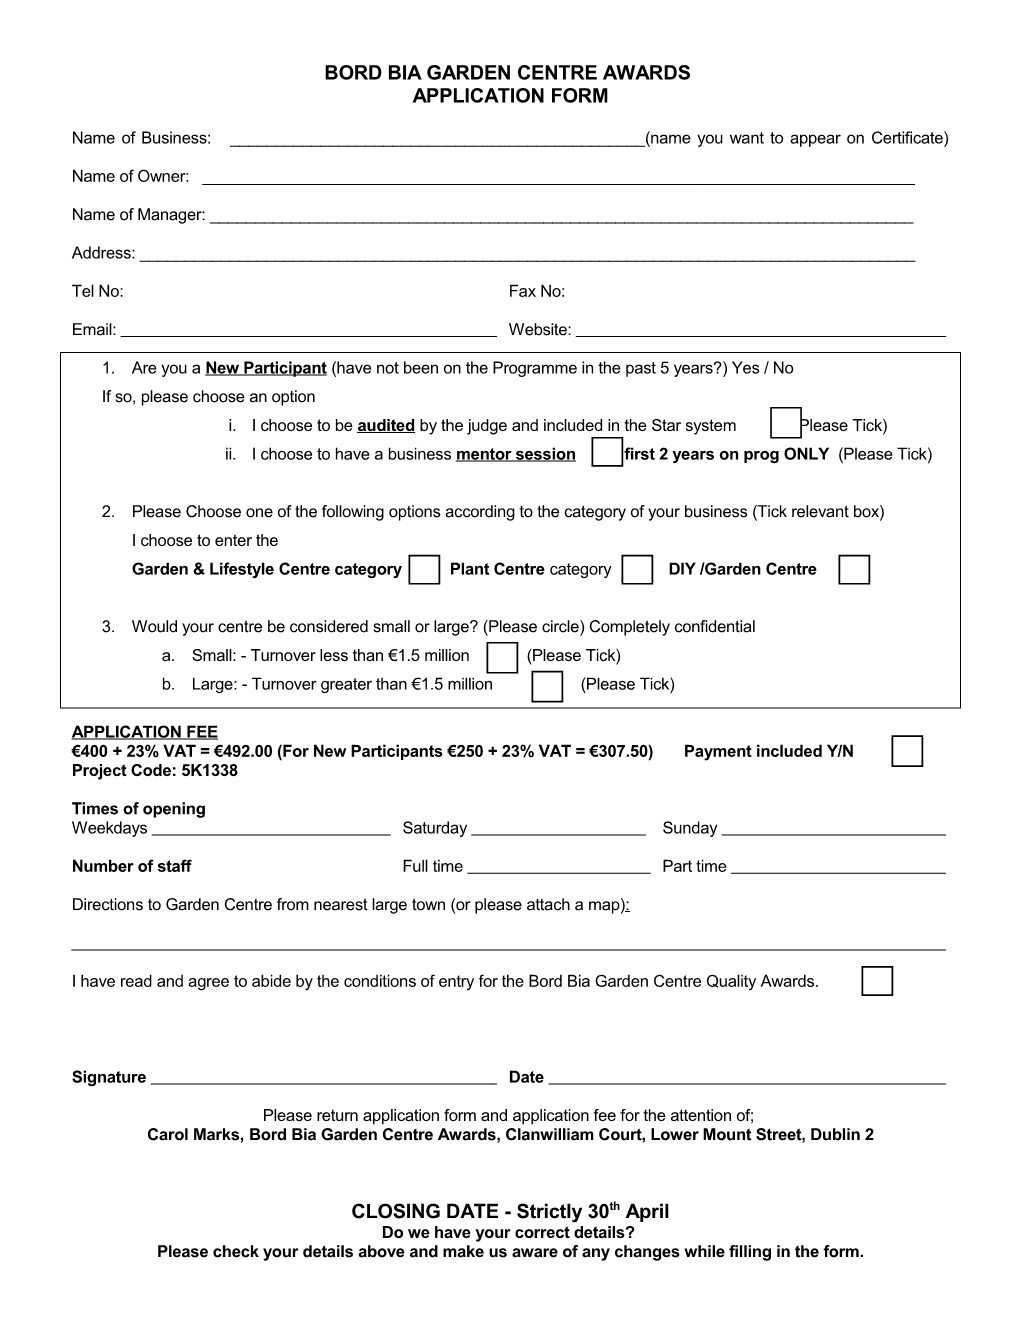 GCQA Application Form